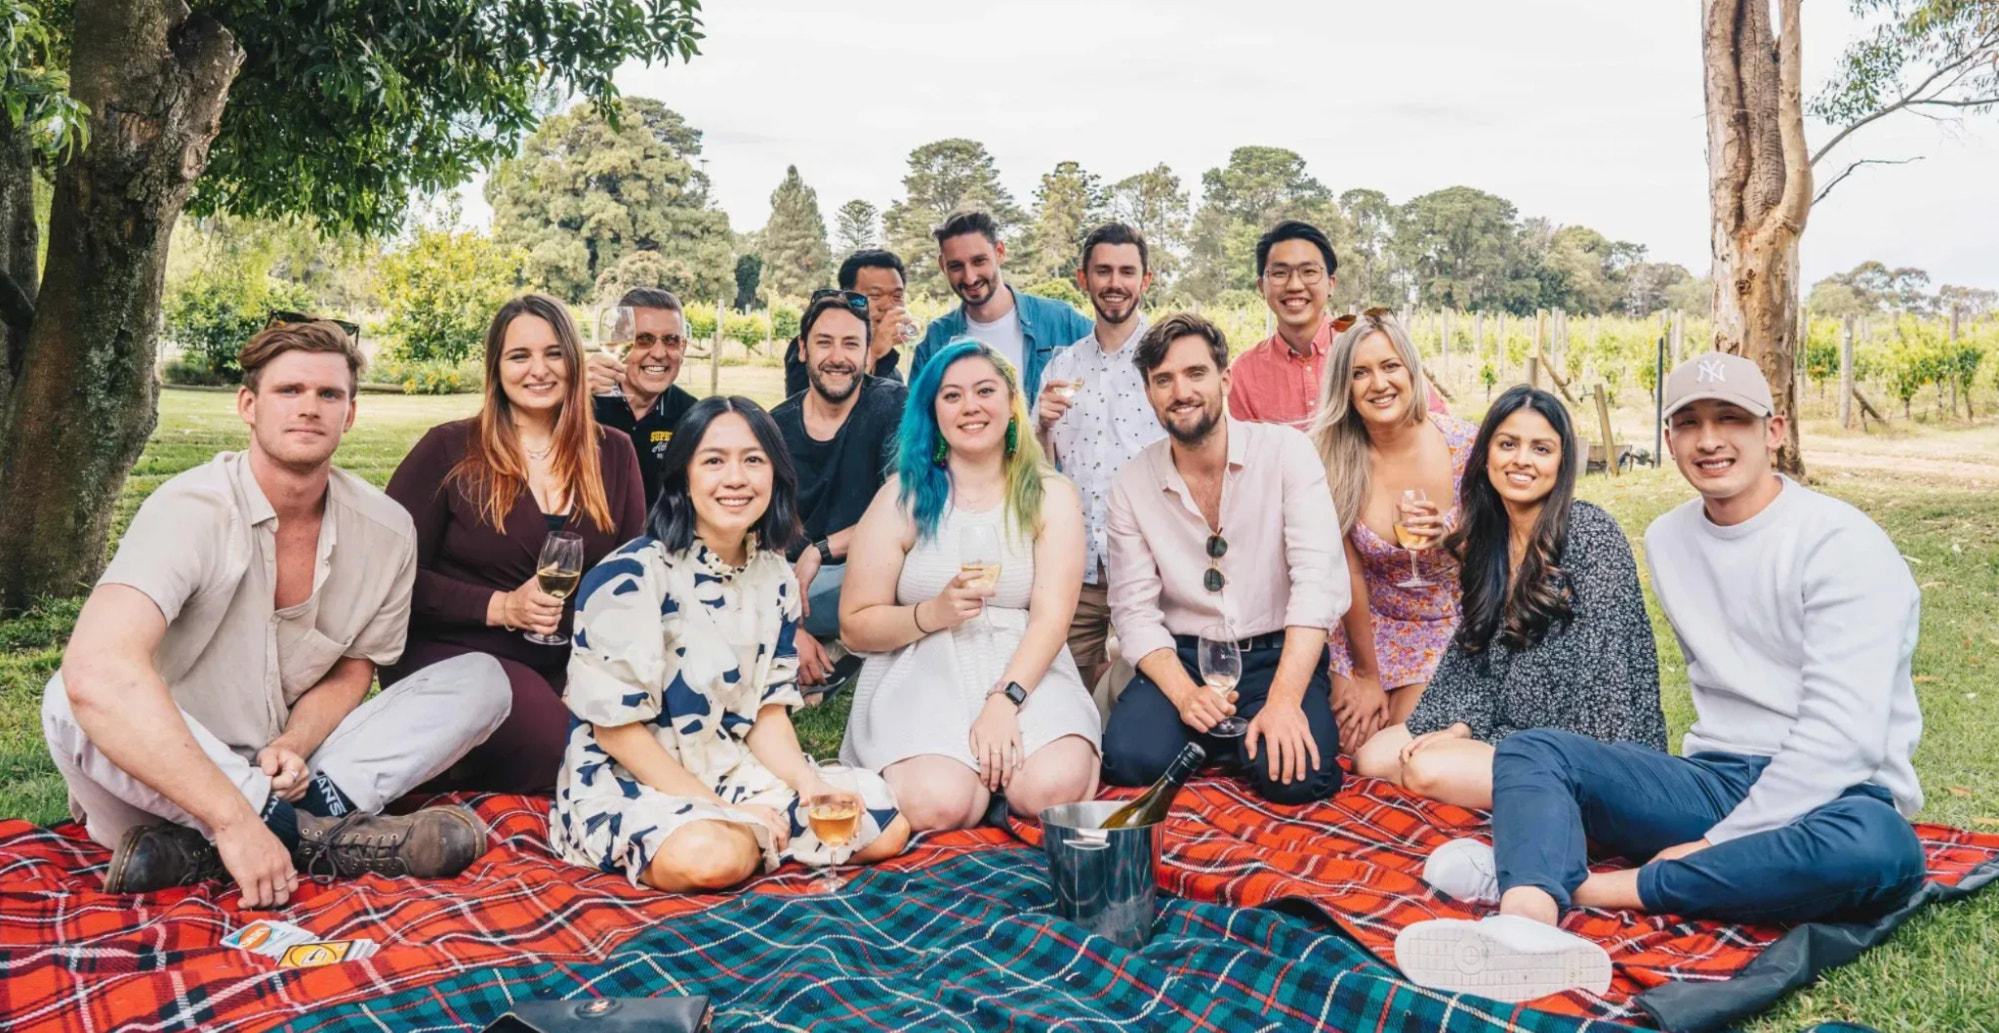 Exo Digital 团队坐在葡萄园的野餐地毯上拍照。